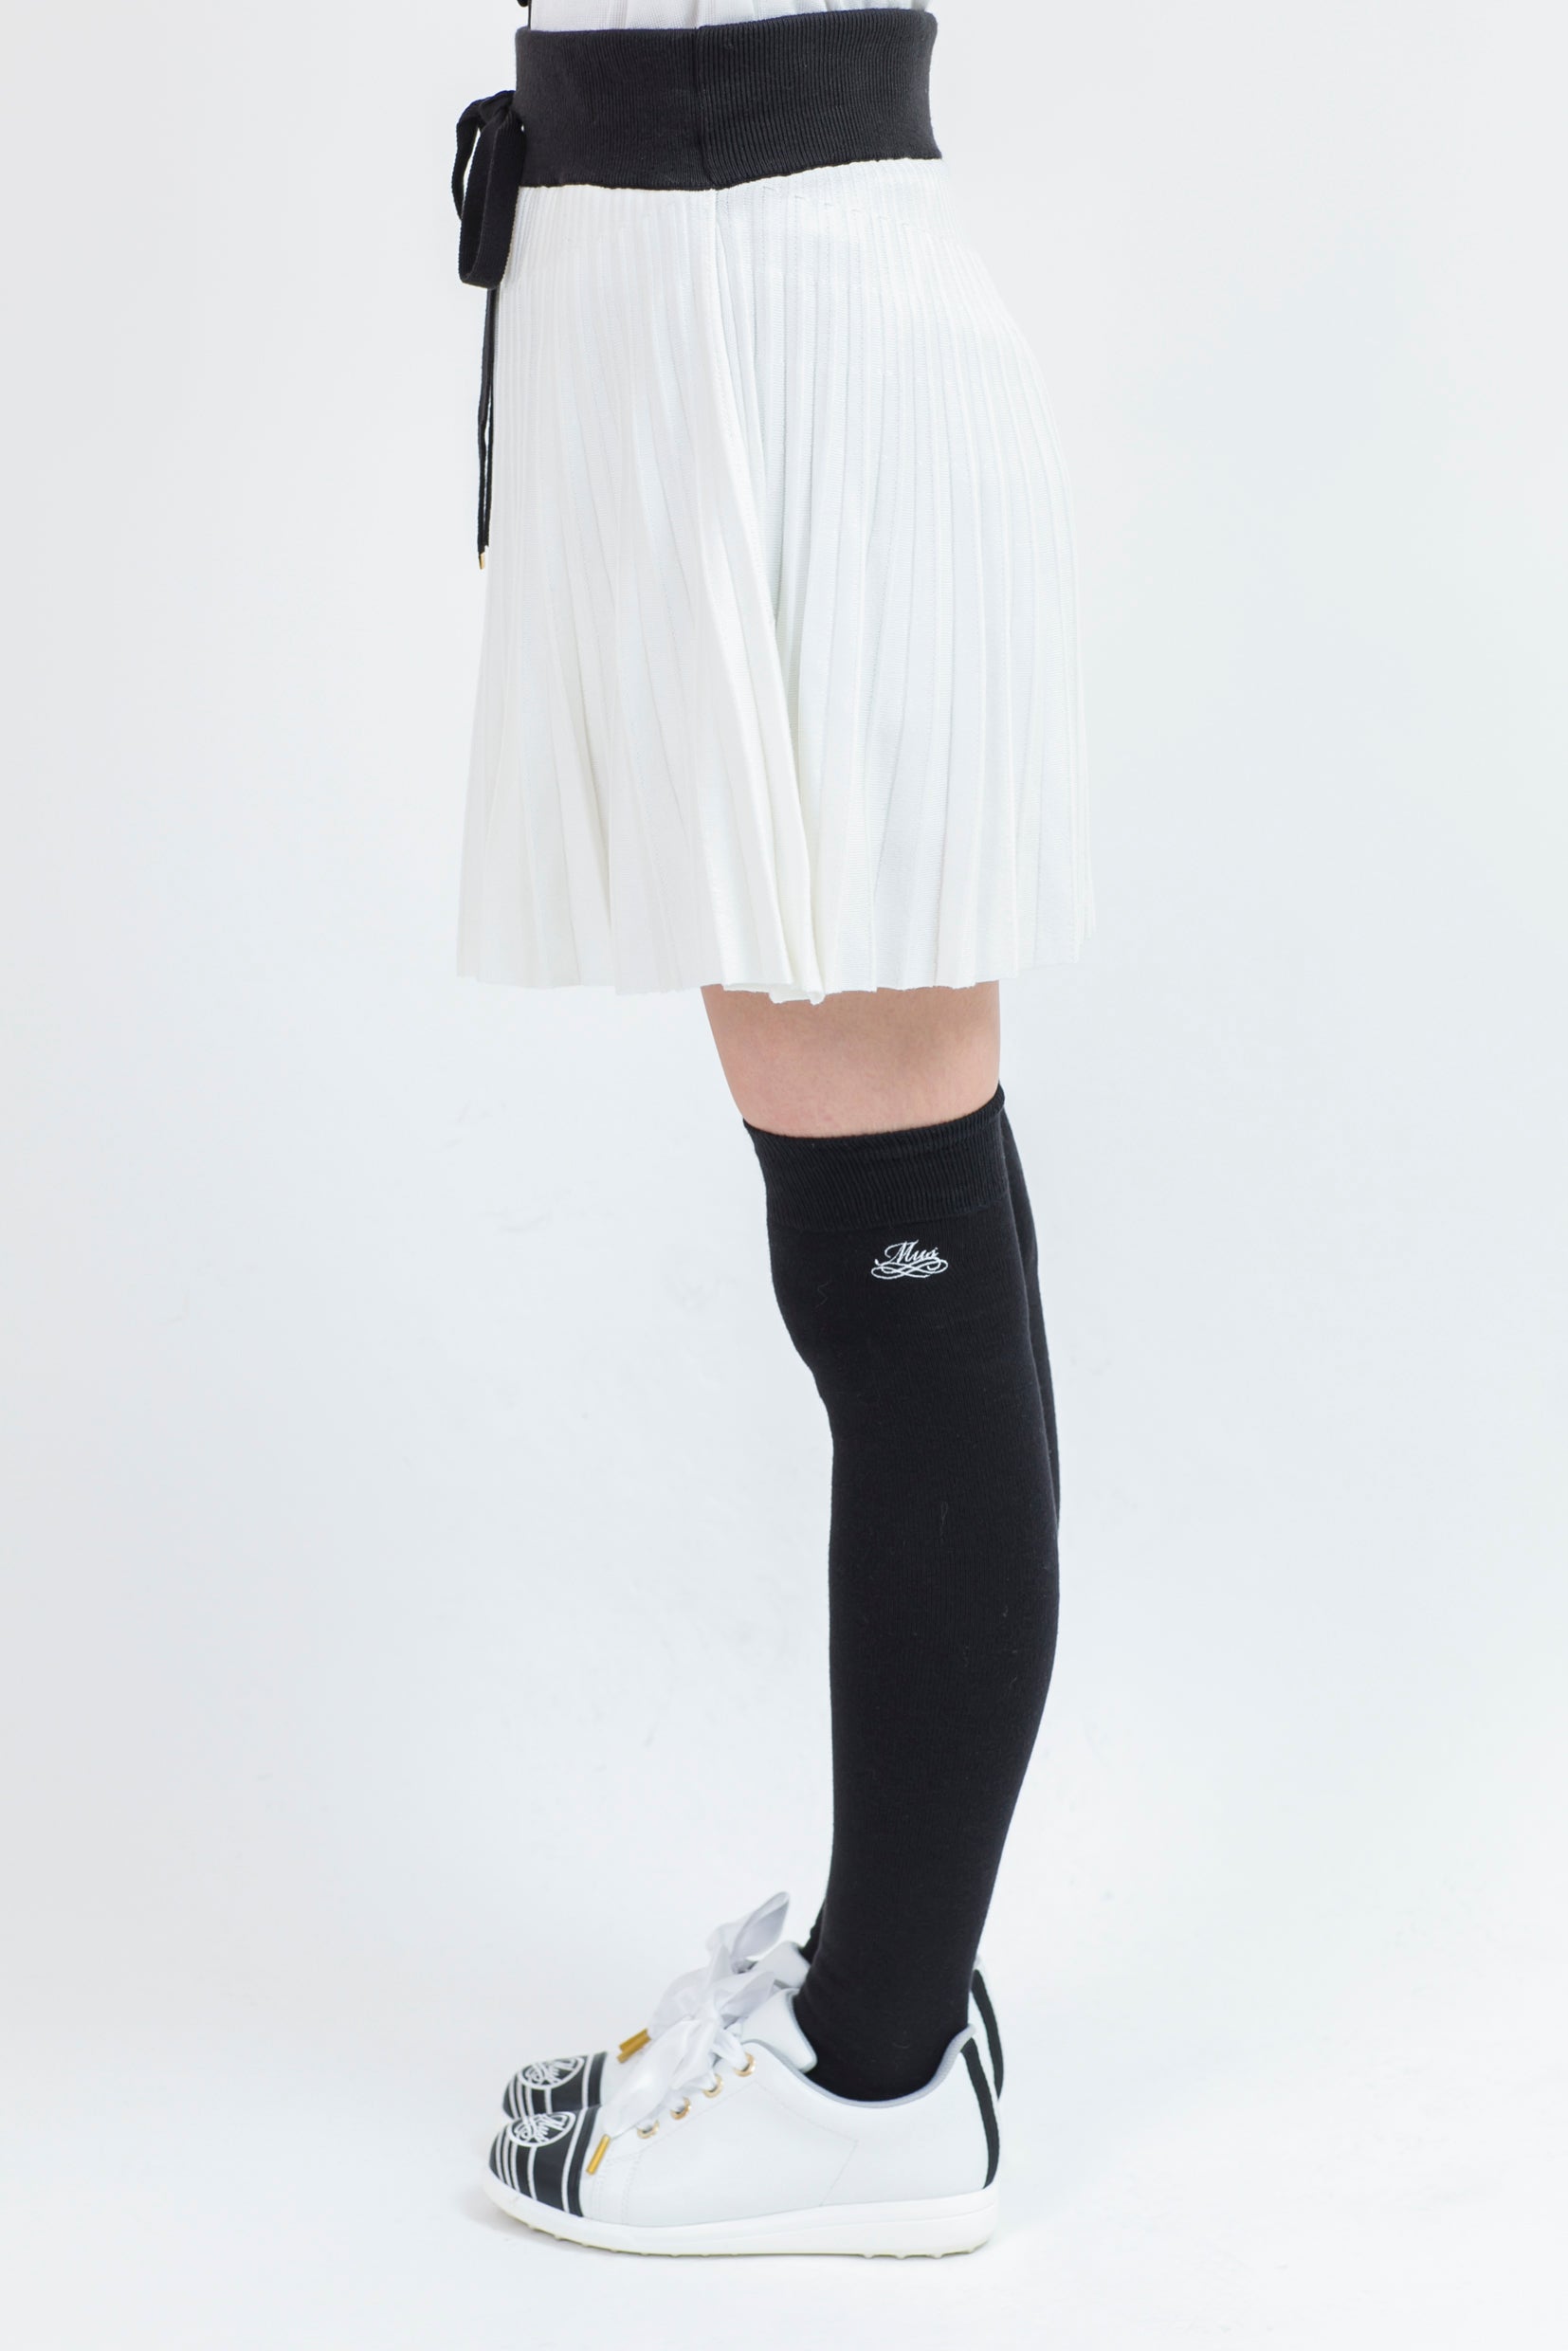 Pleated knit skirt (701H8516K)